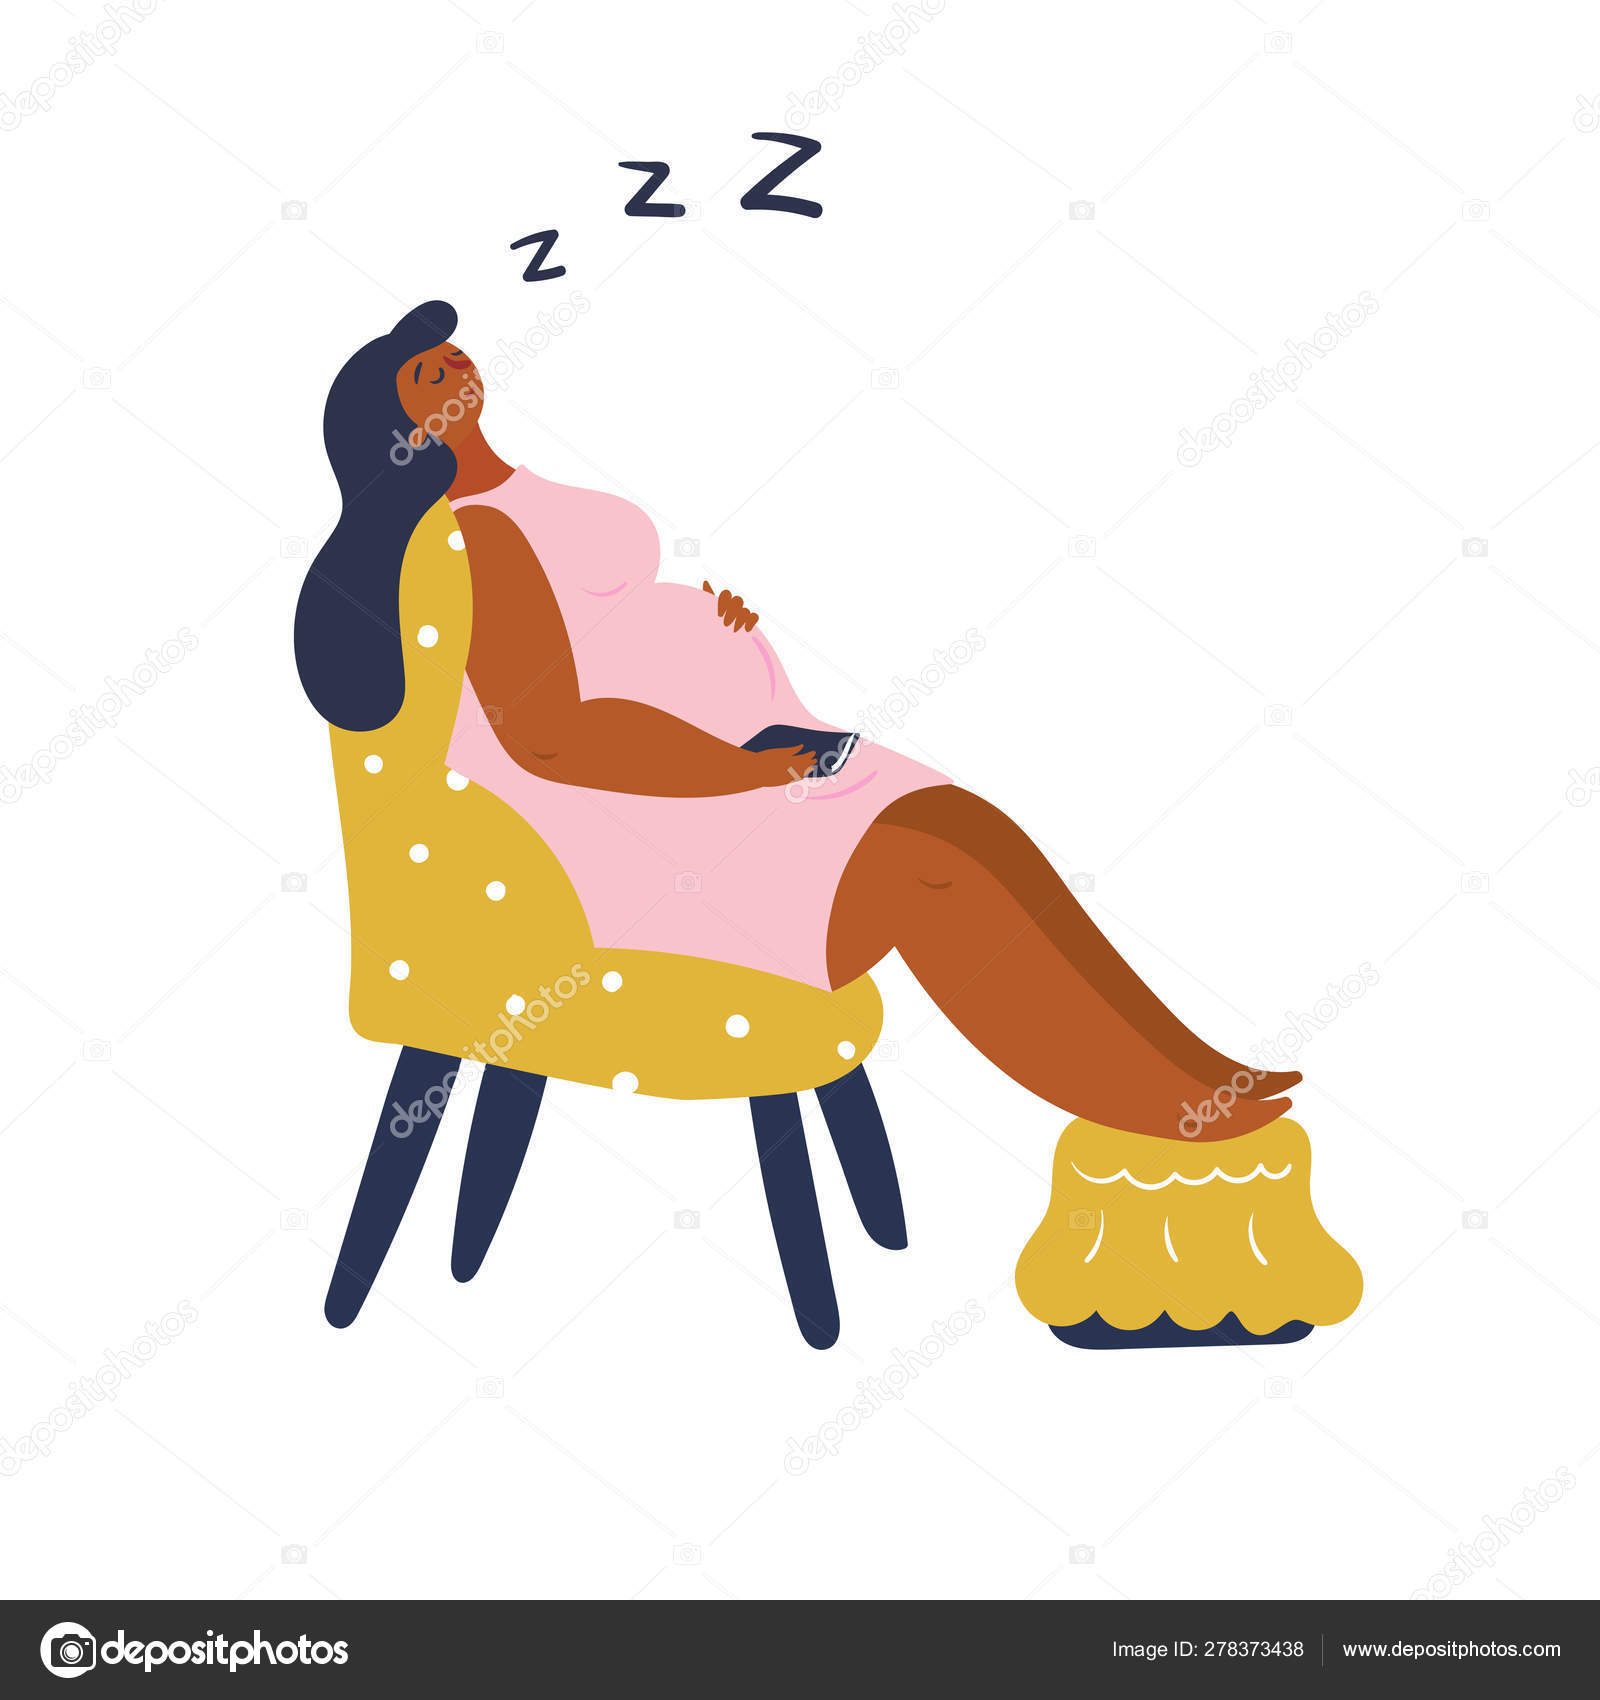 https://st4.depositphotos.com/14087854/27837/v/1600/depositphotos_278373438-stock-illustration-sleeping-pregnant-woman-is-resting.jpg